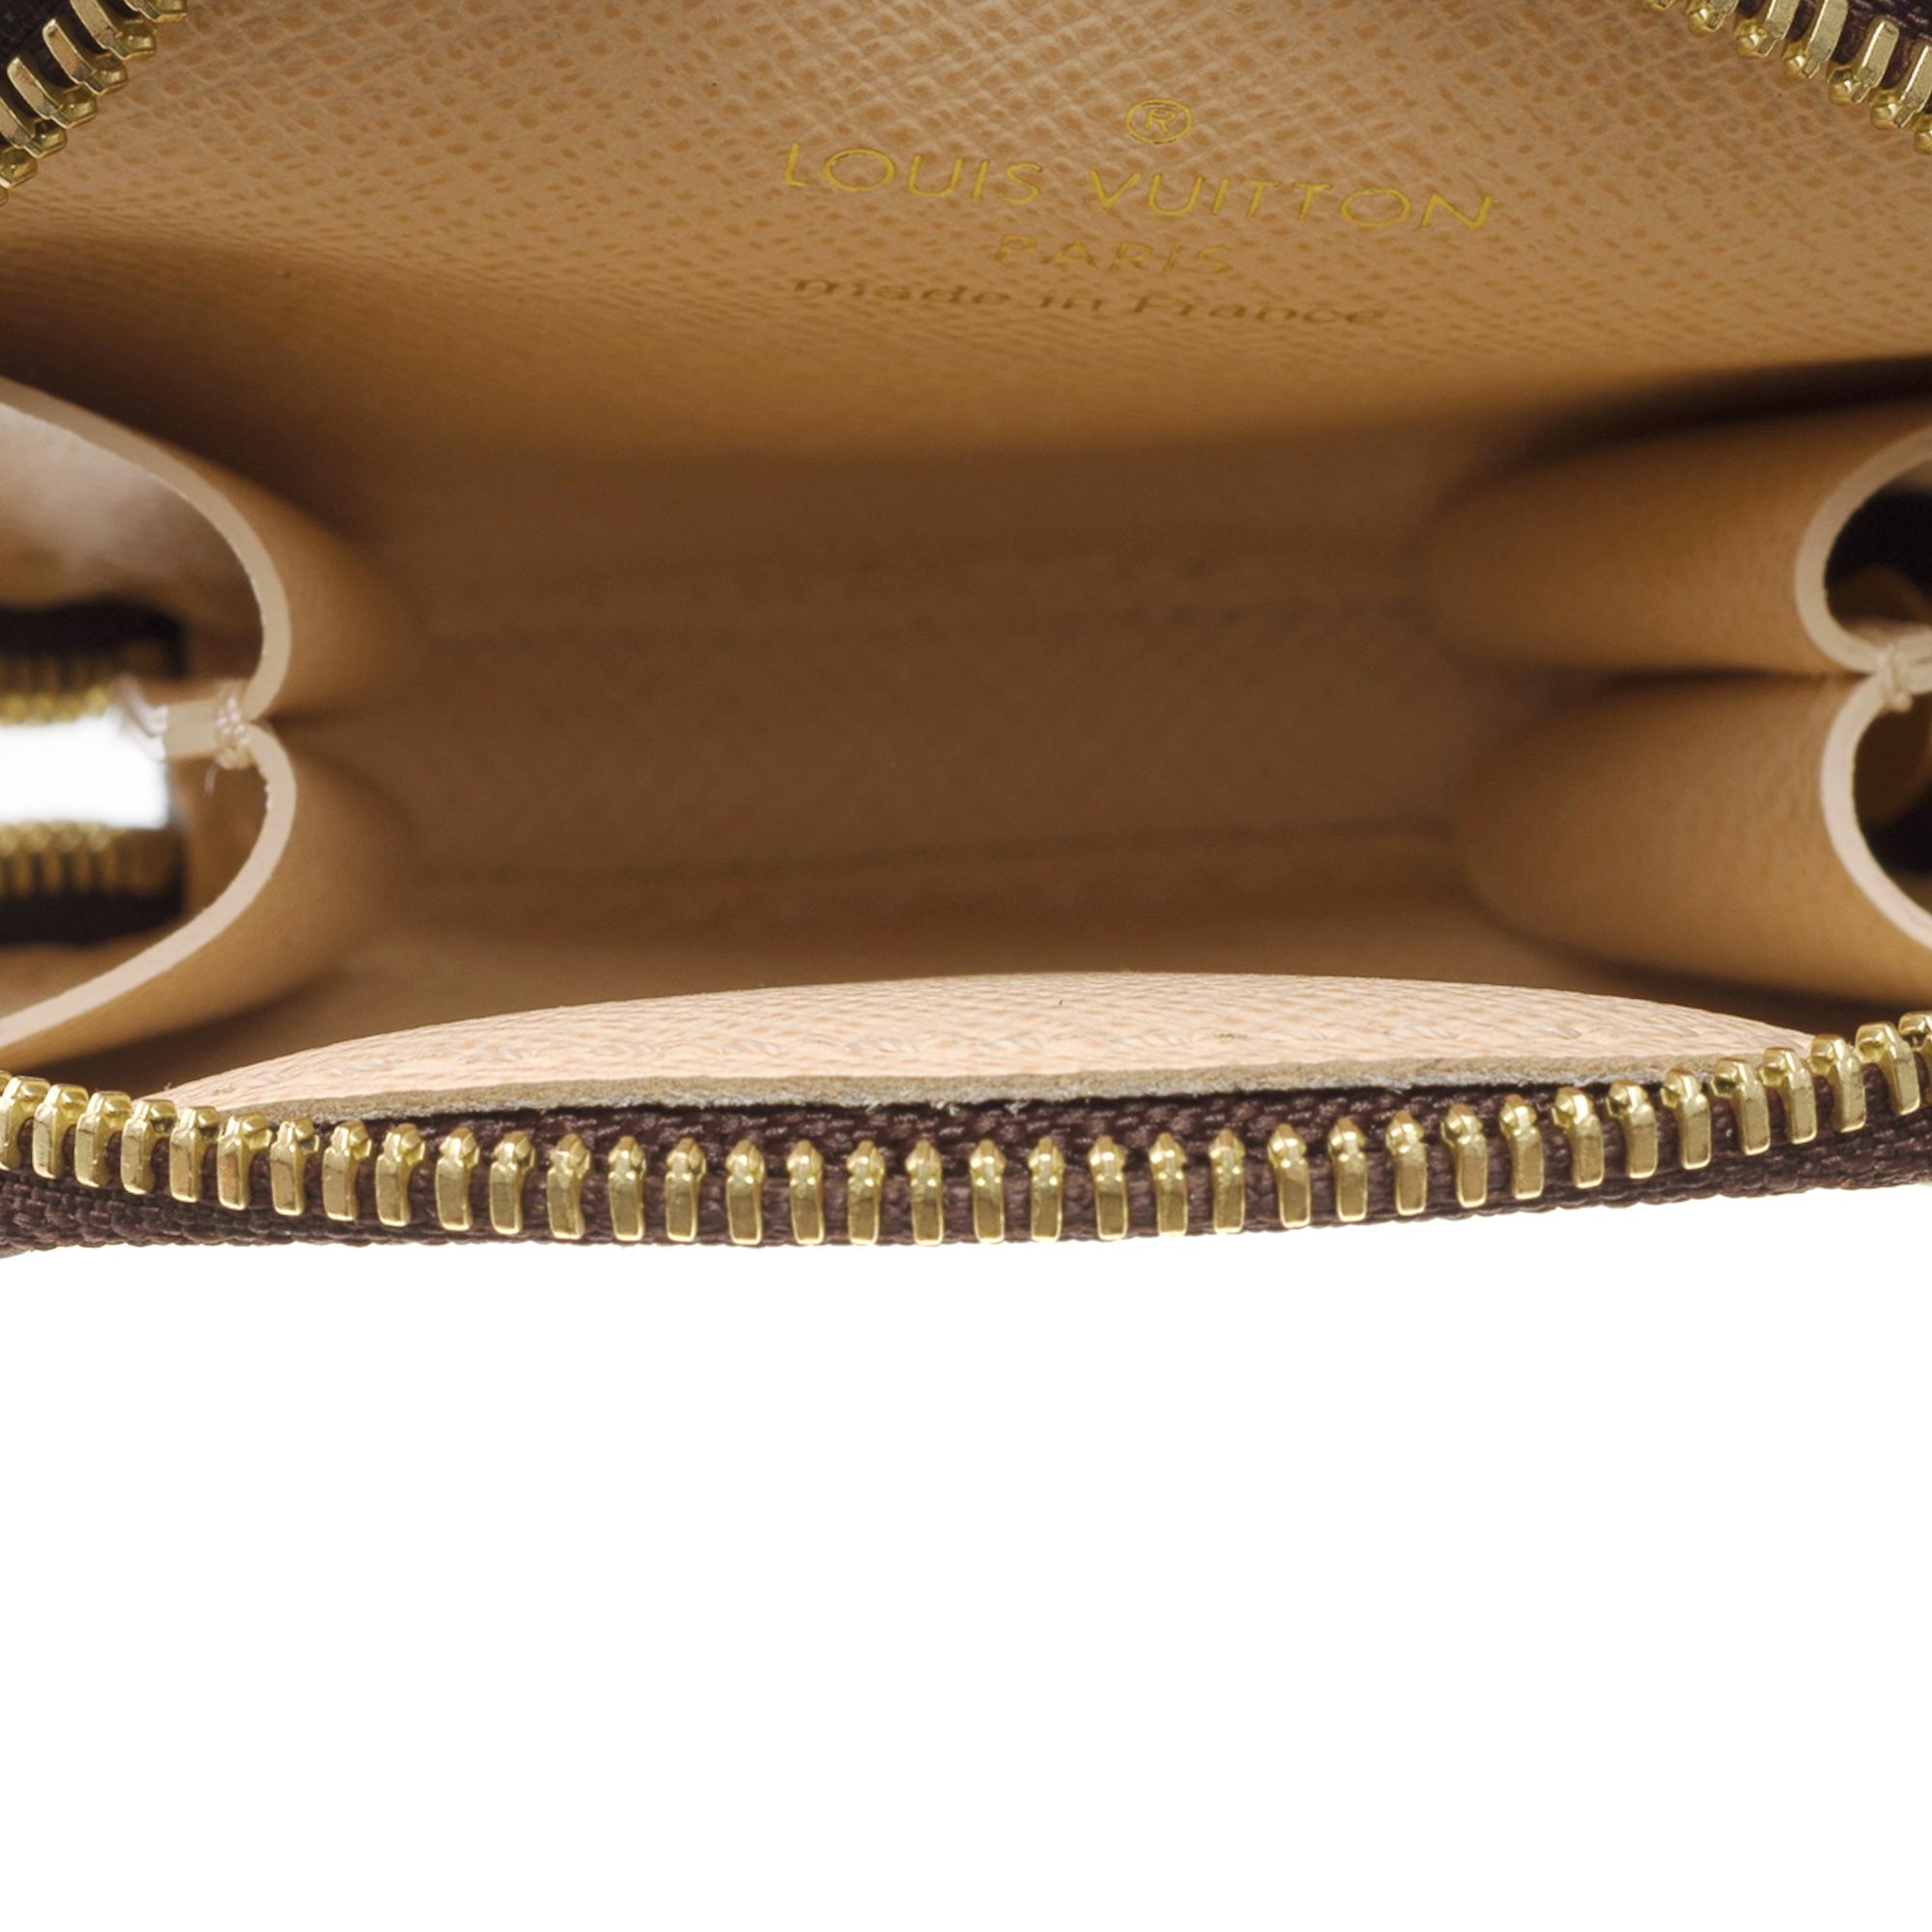 New Louis Vuitton Pillow Maxi Pochette shoulder bag in khaki/Beige nylon, GHW For Sale 6